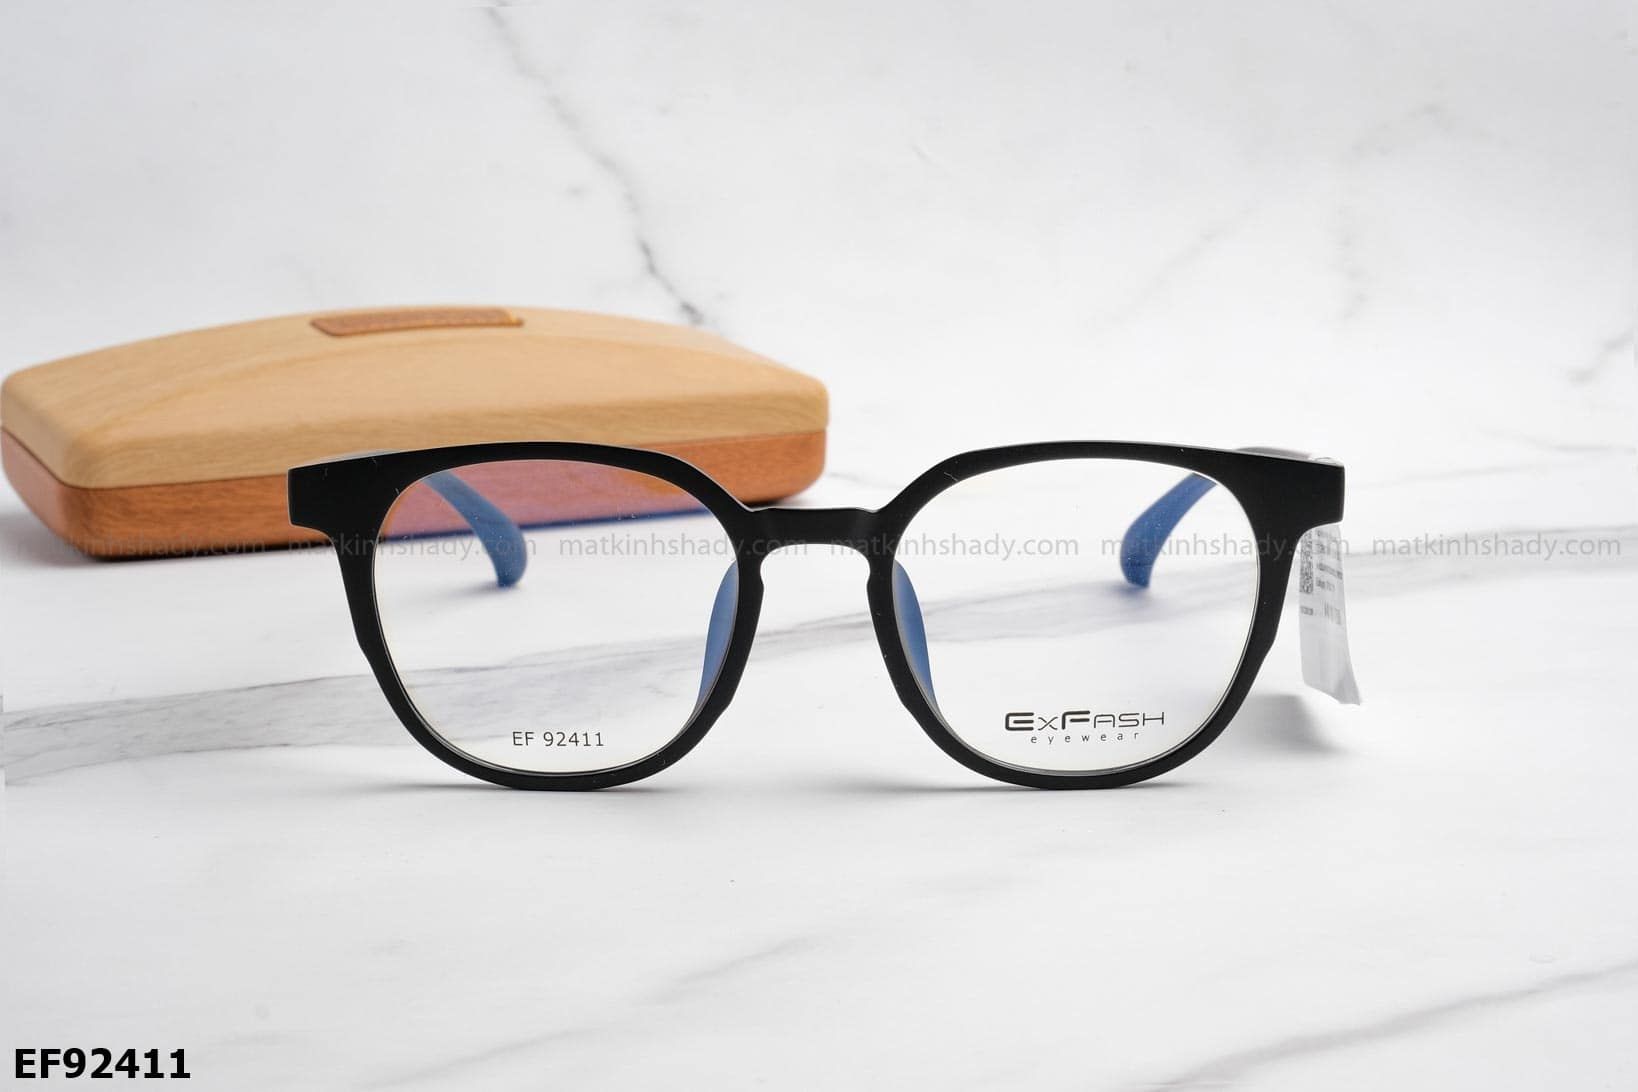  Exfash Eyewear - Glasses - EF92411 